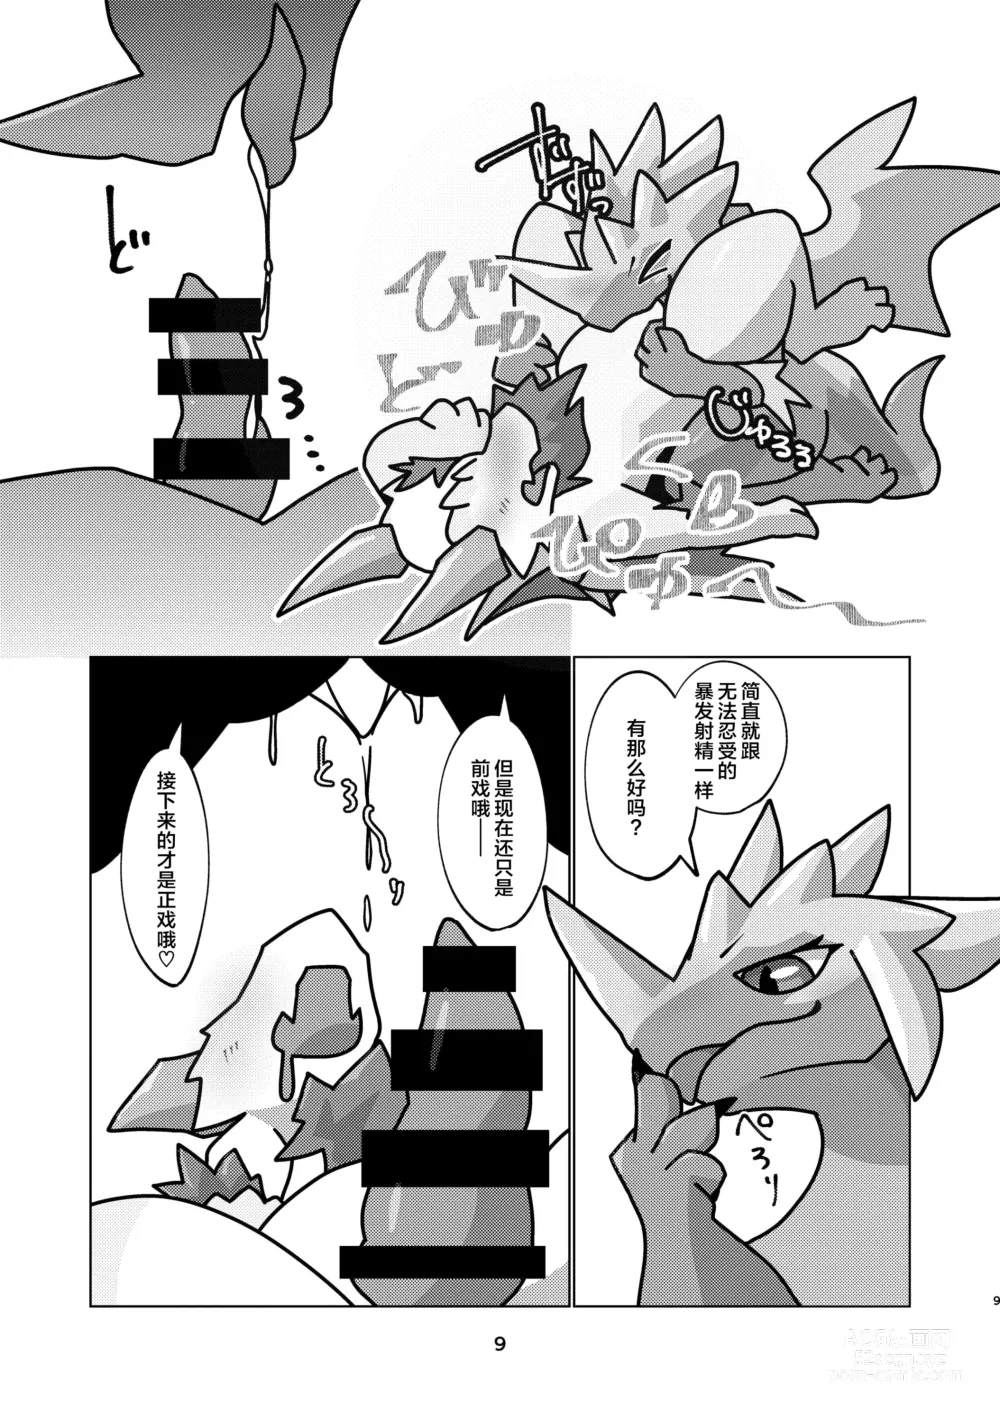 Page 9 of doujinshi 爱色冰龙的怪异克服